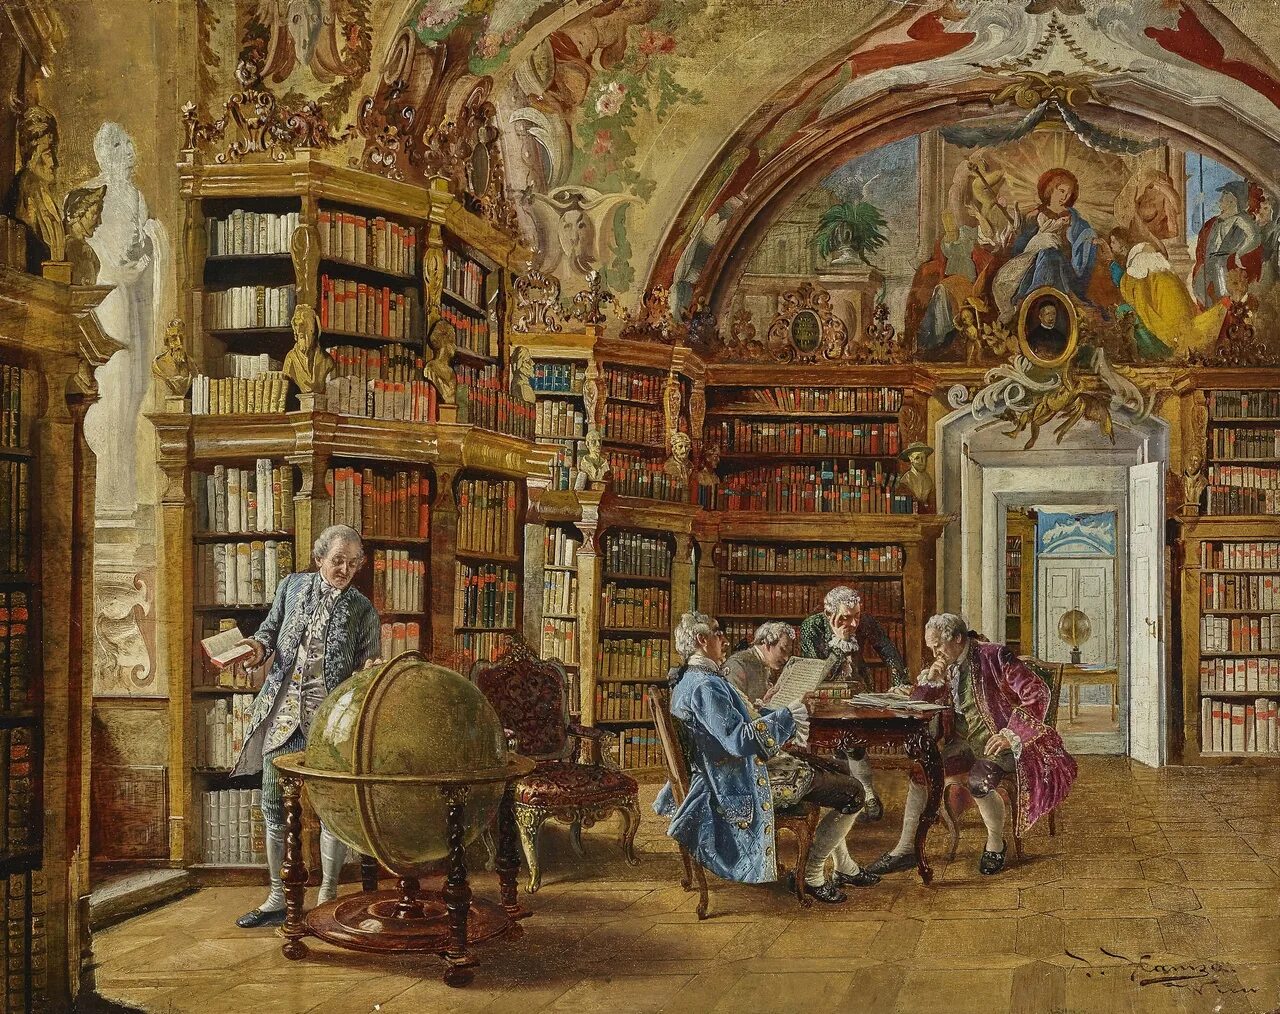 Иоганн Хамза (1850-1927) джентльмен. Йохан Хамза художник. Библиотека в живописи.